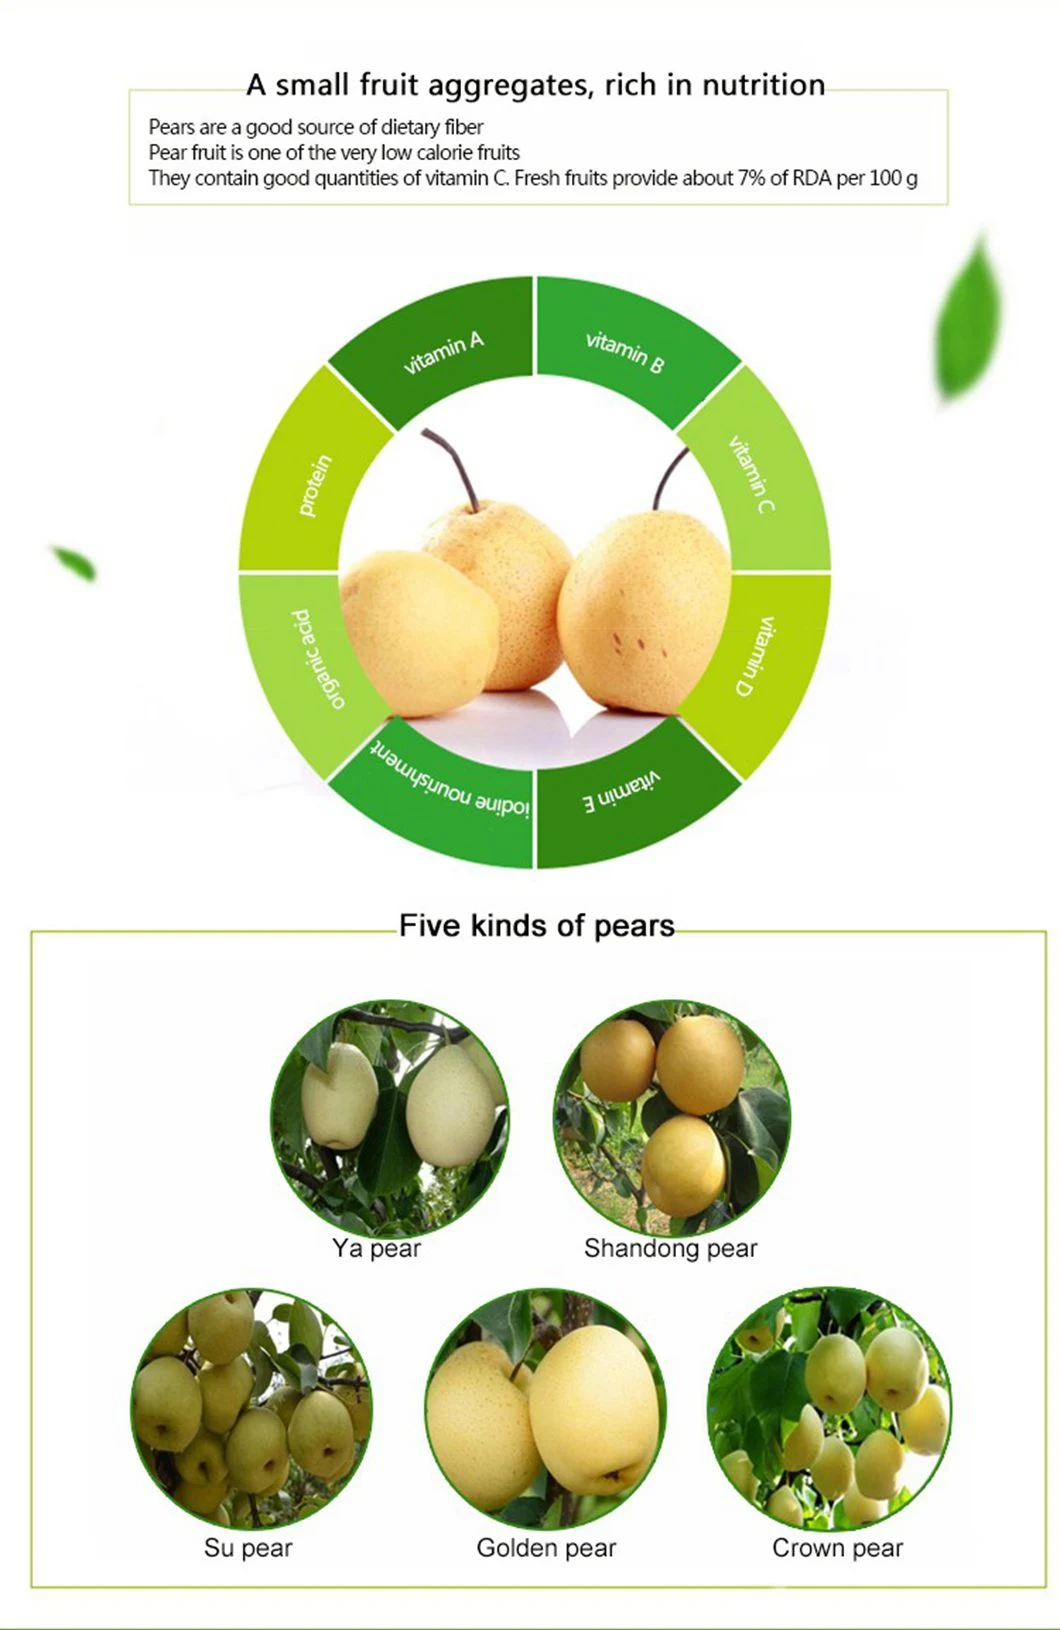 Asian Fresh Singo Pear Organic Korea Pear Sweet and Moisture High Quality Pear From China